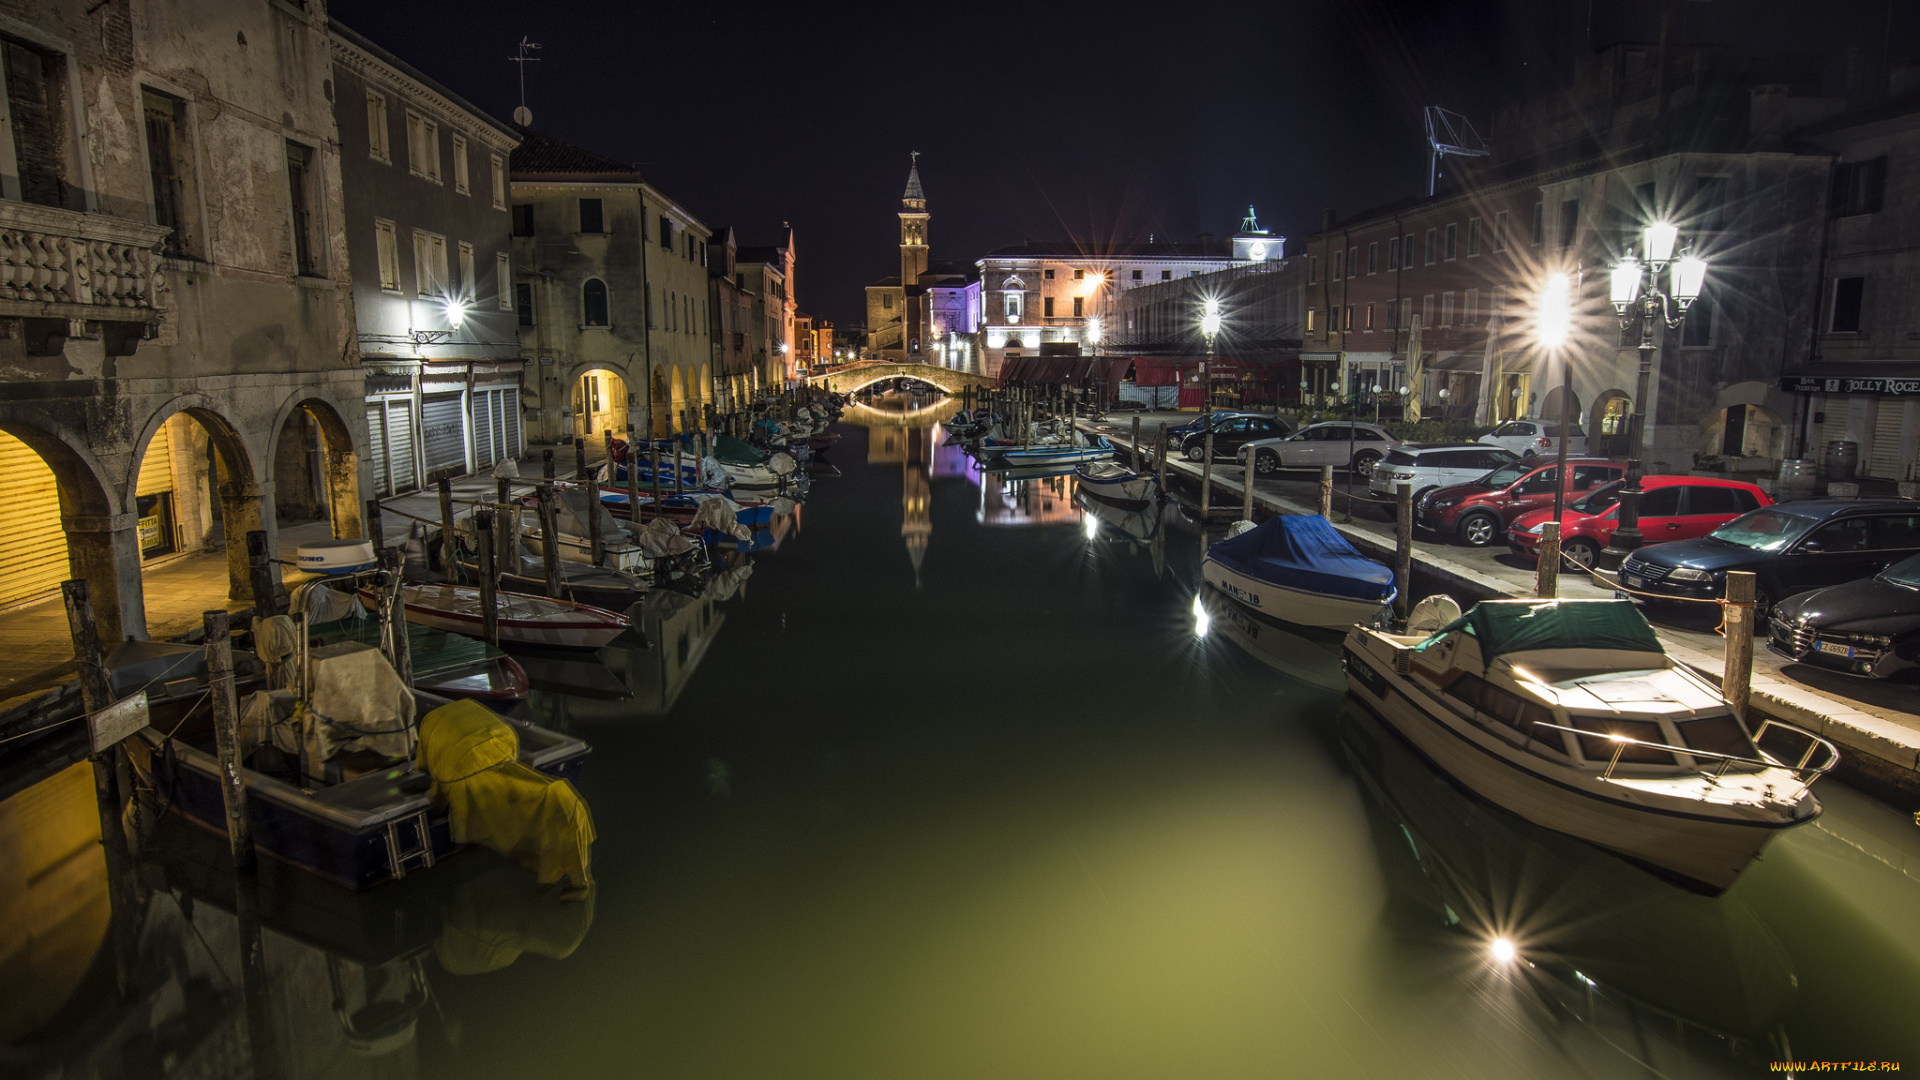 chioggia, venezia, корабли, порты, , , причалы, ночь, огни